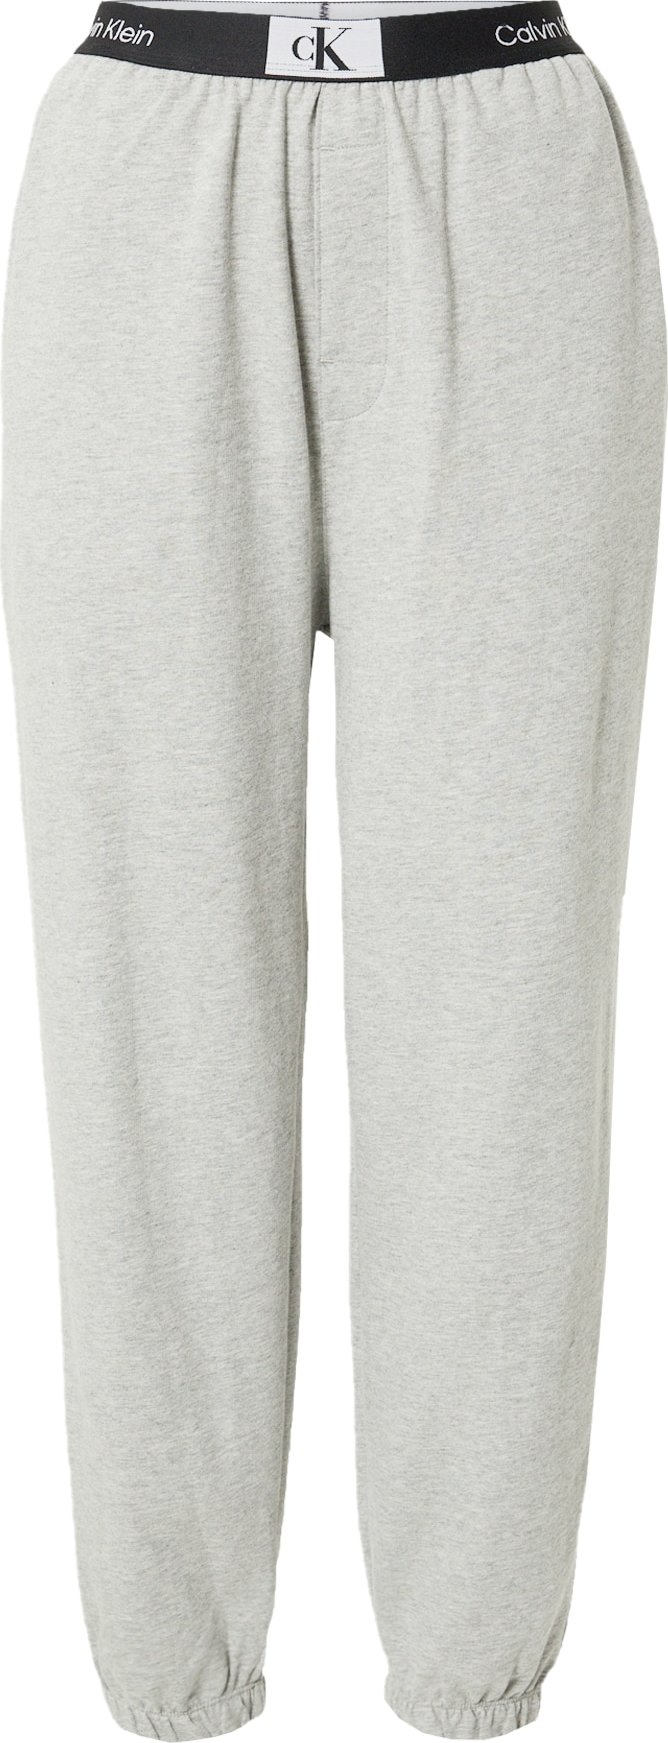 Calvin Klein Underwear Kalhoty šedá / černá / bílá